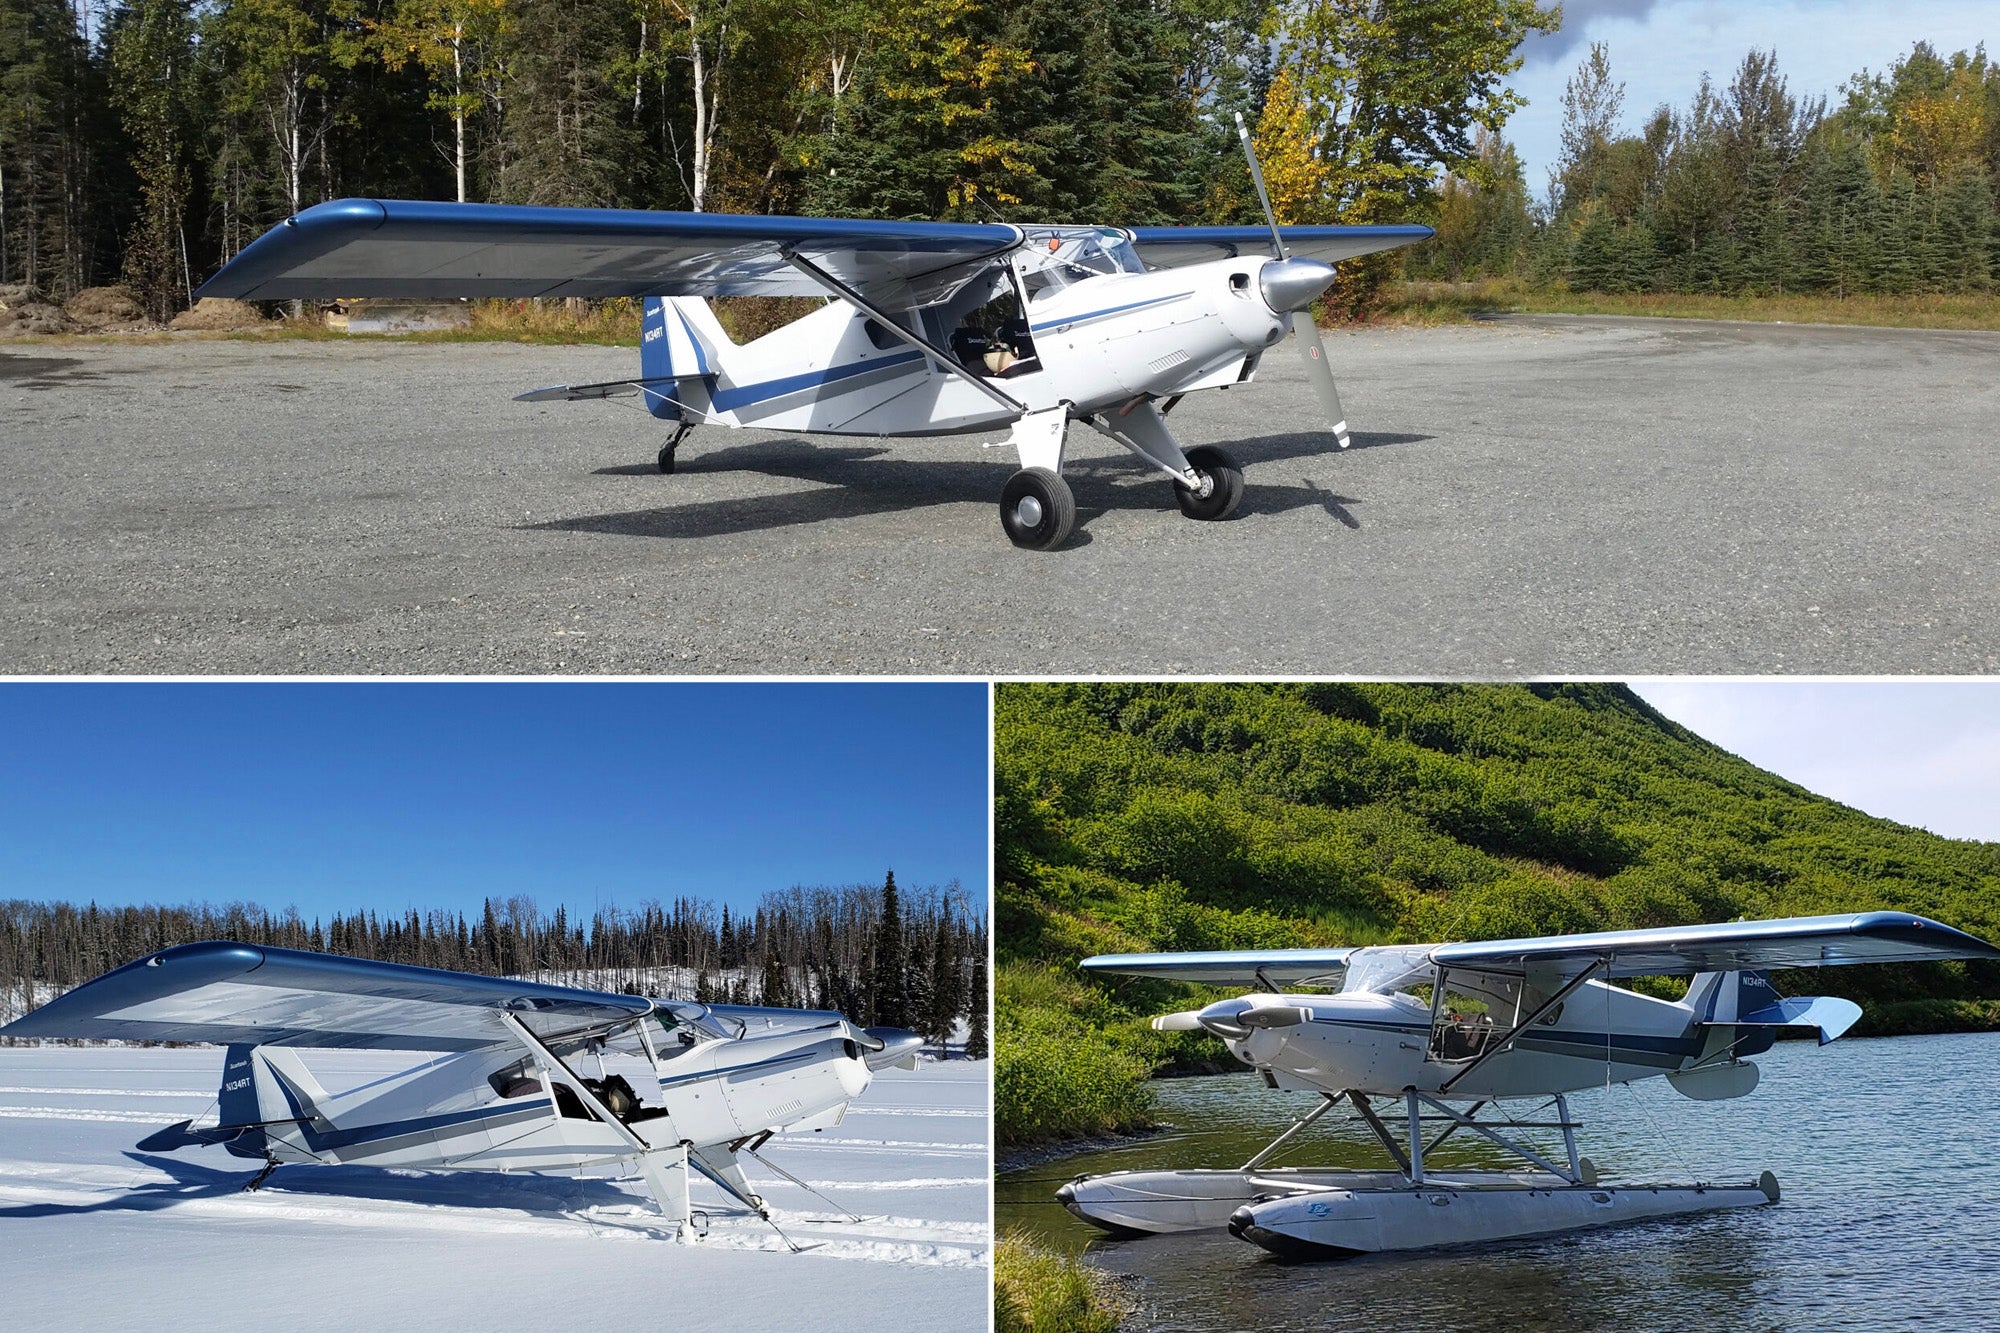 Bearhawk aircraft in Alaska with floats